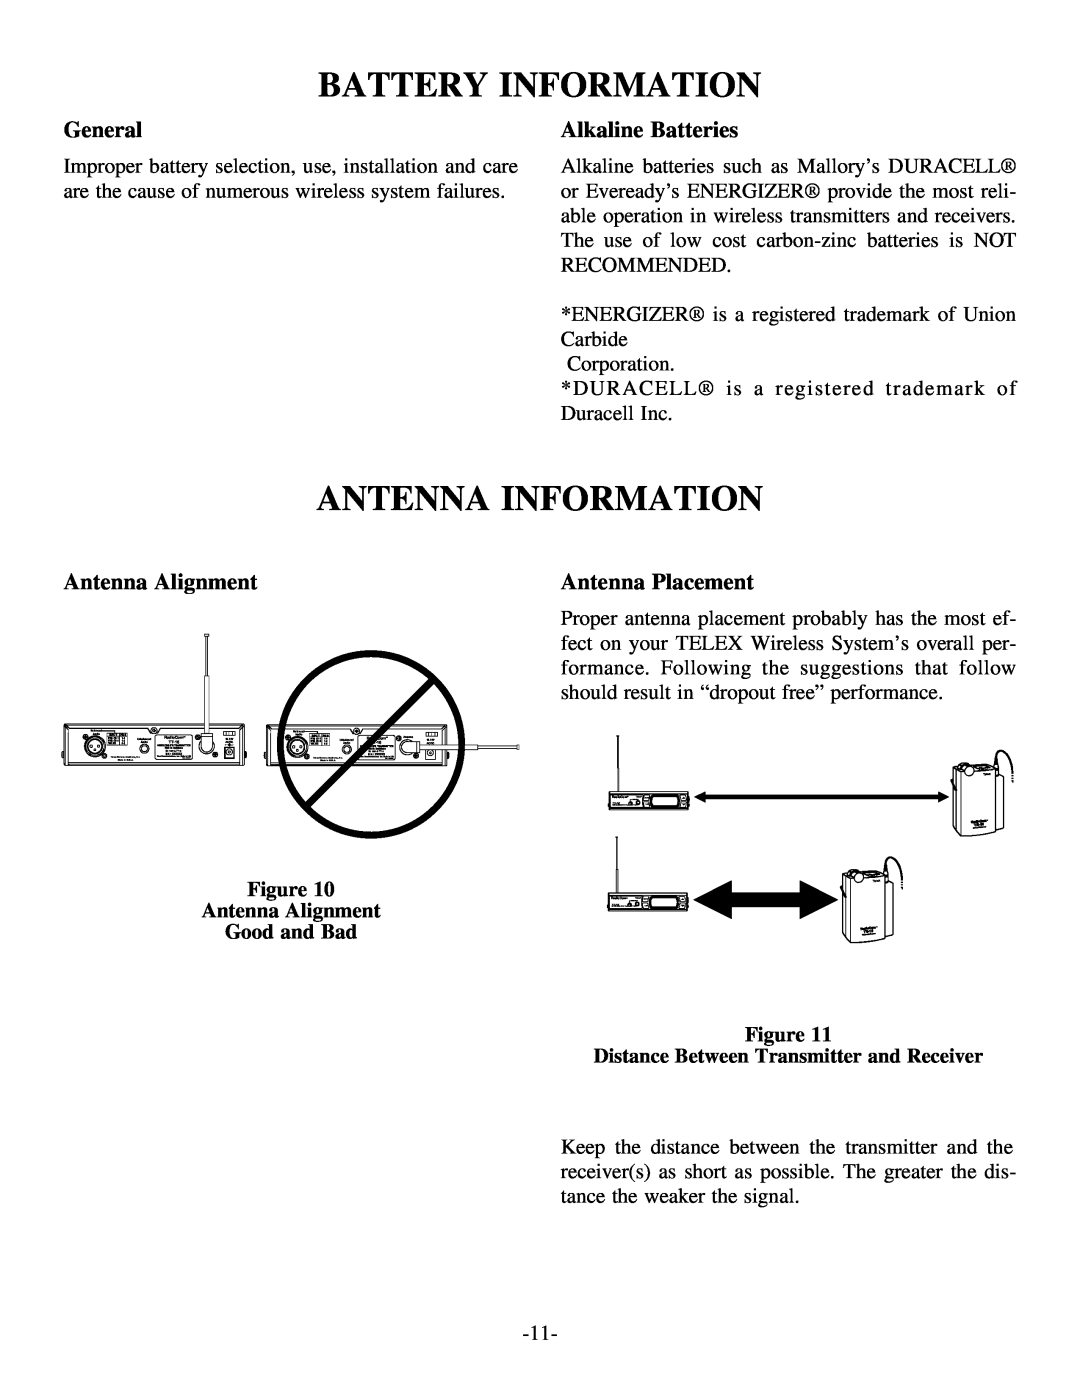 Telex TT-16 Battery Information, Antenna Information, General, Alkaline Batteries, Antenna Alignment, Antenna Placement 